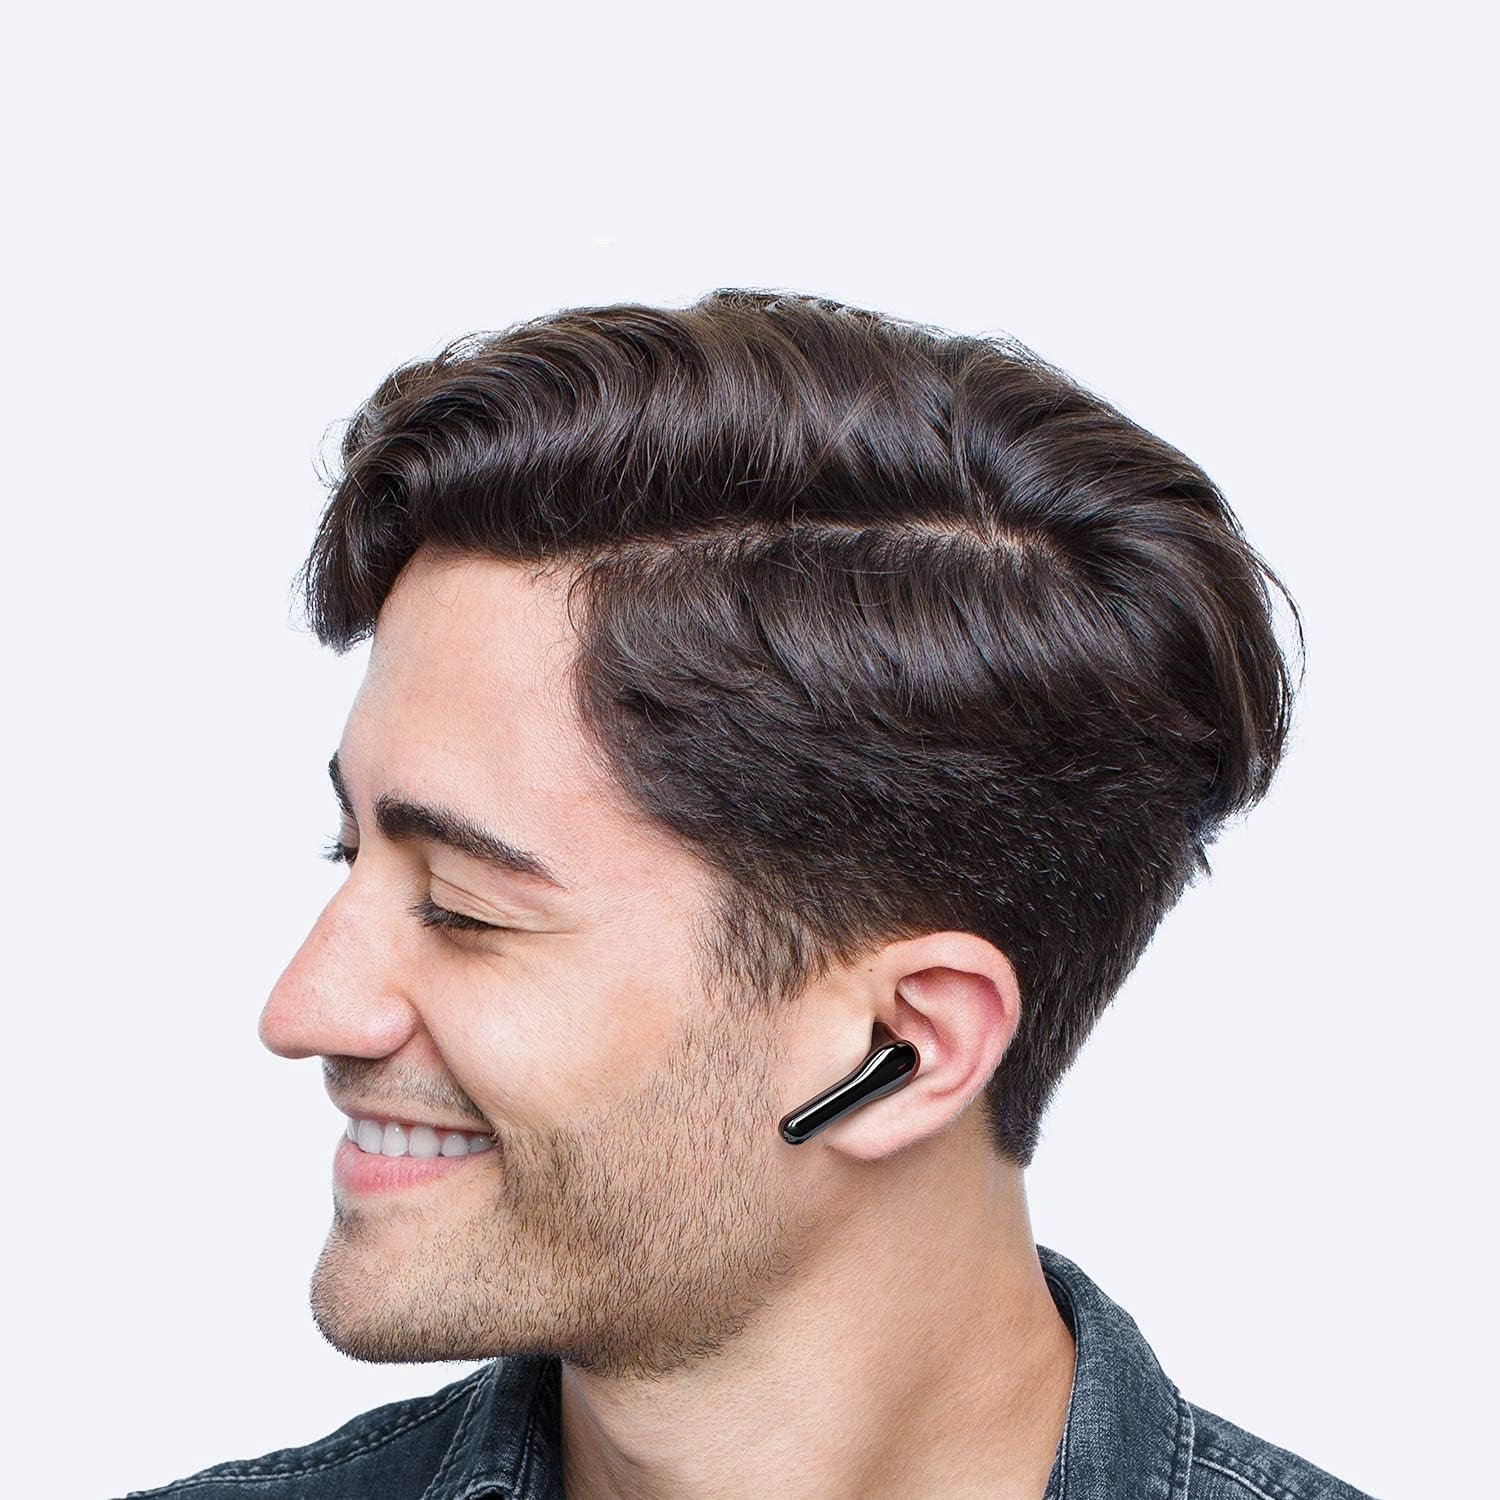 tribit-wireless-earbuds-bluetooth